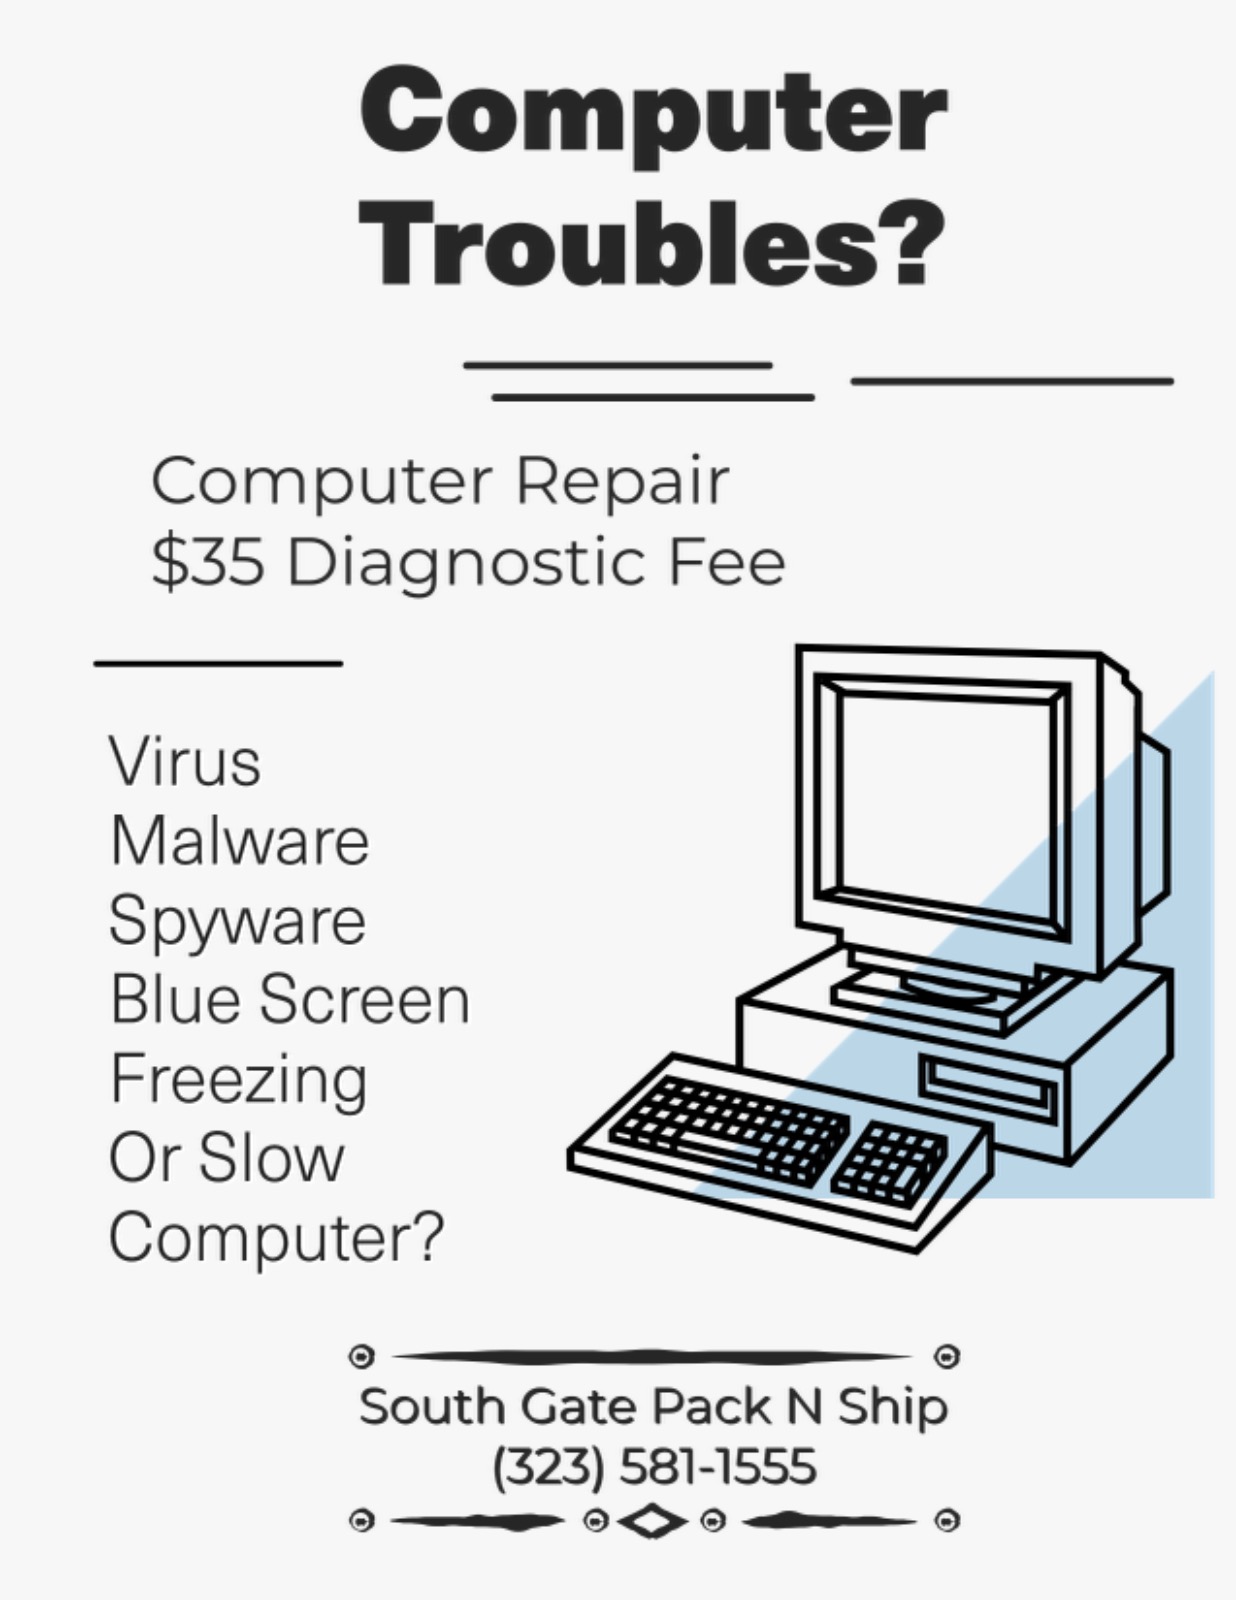 Computer Troubles